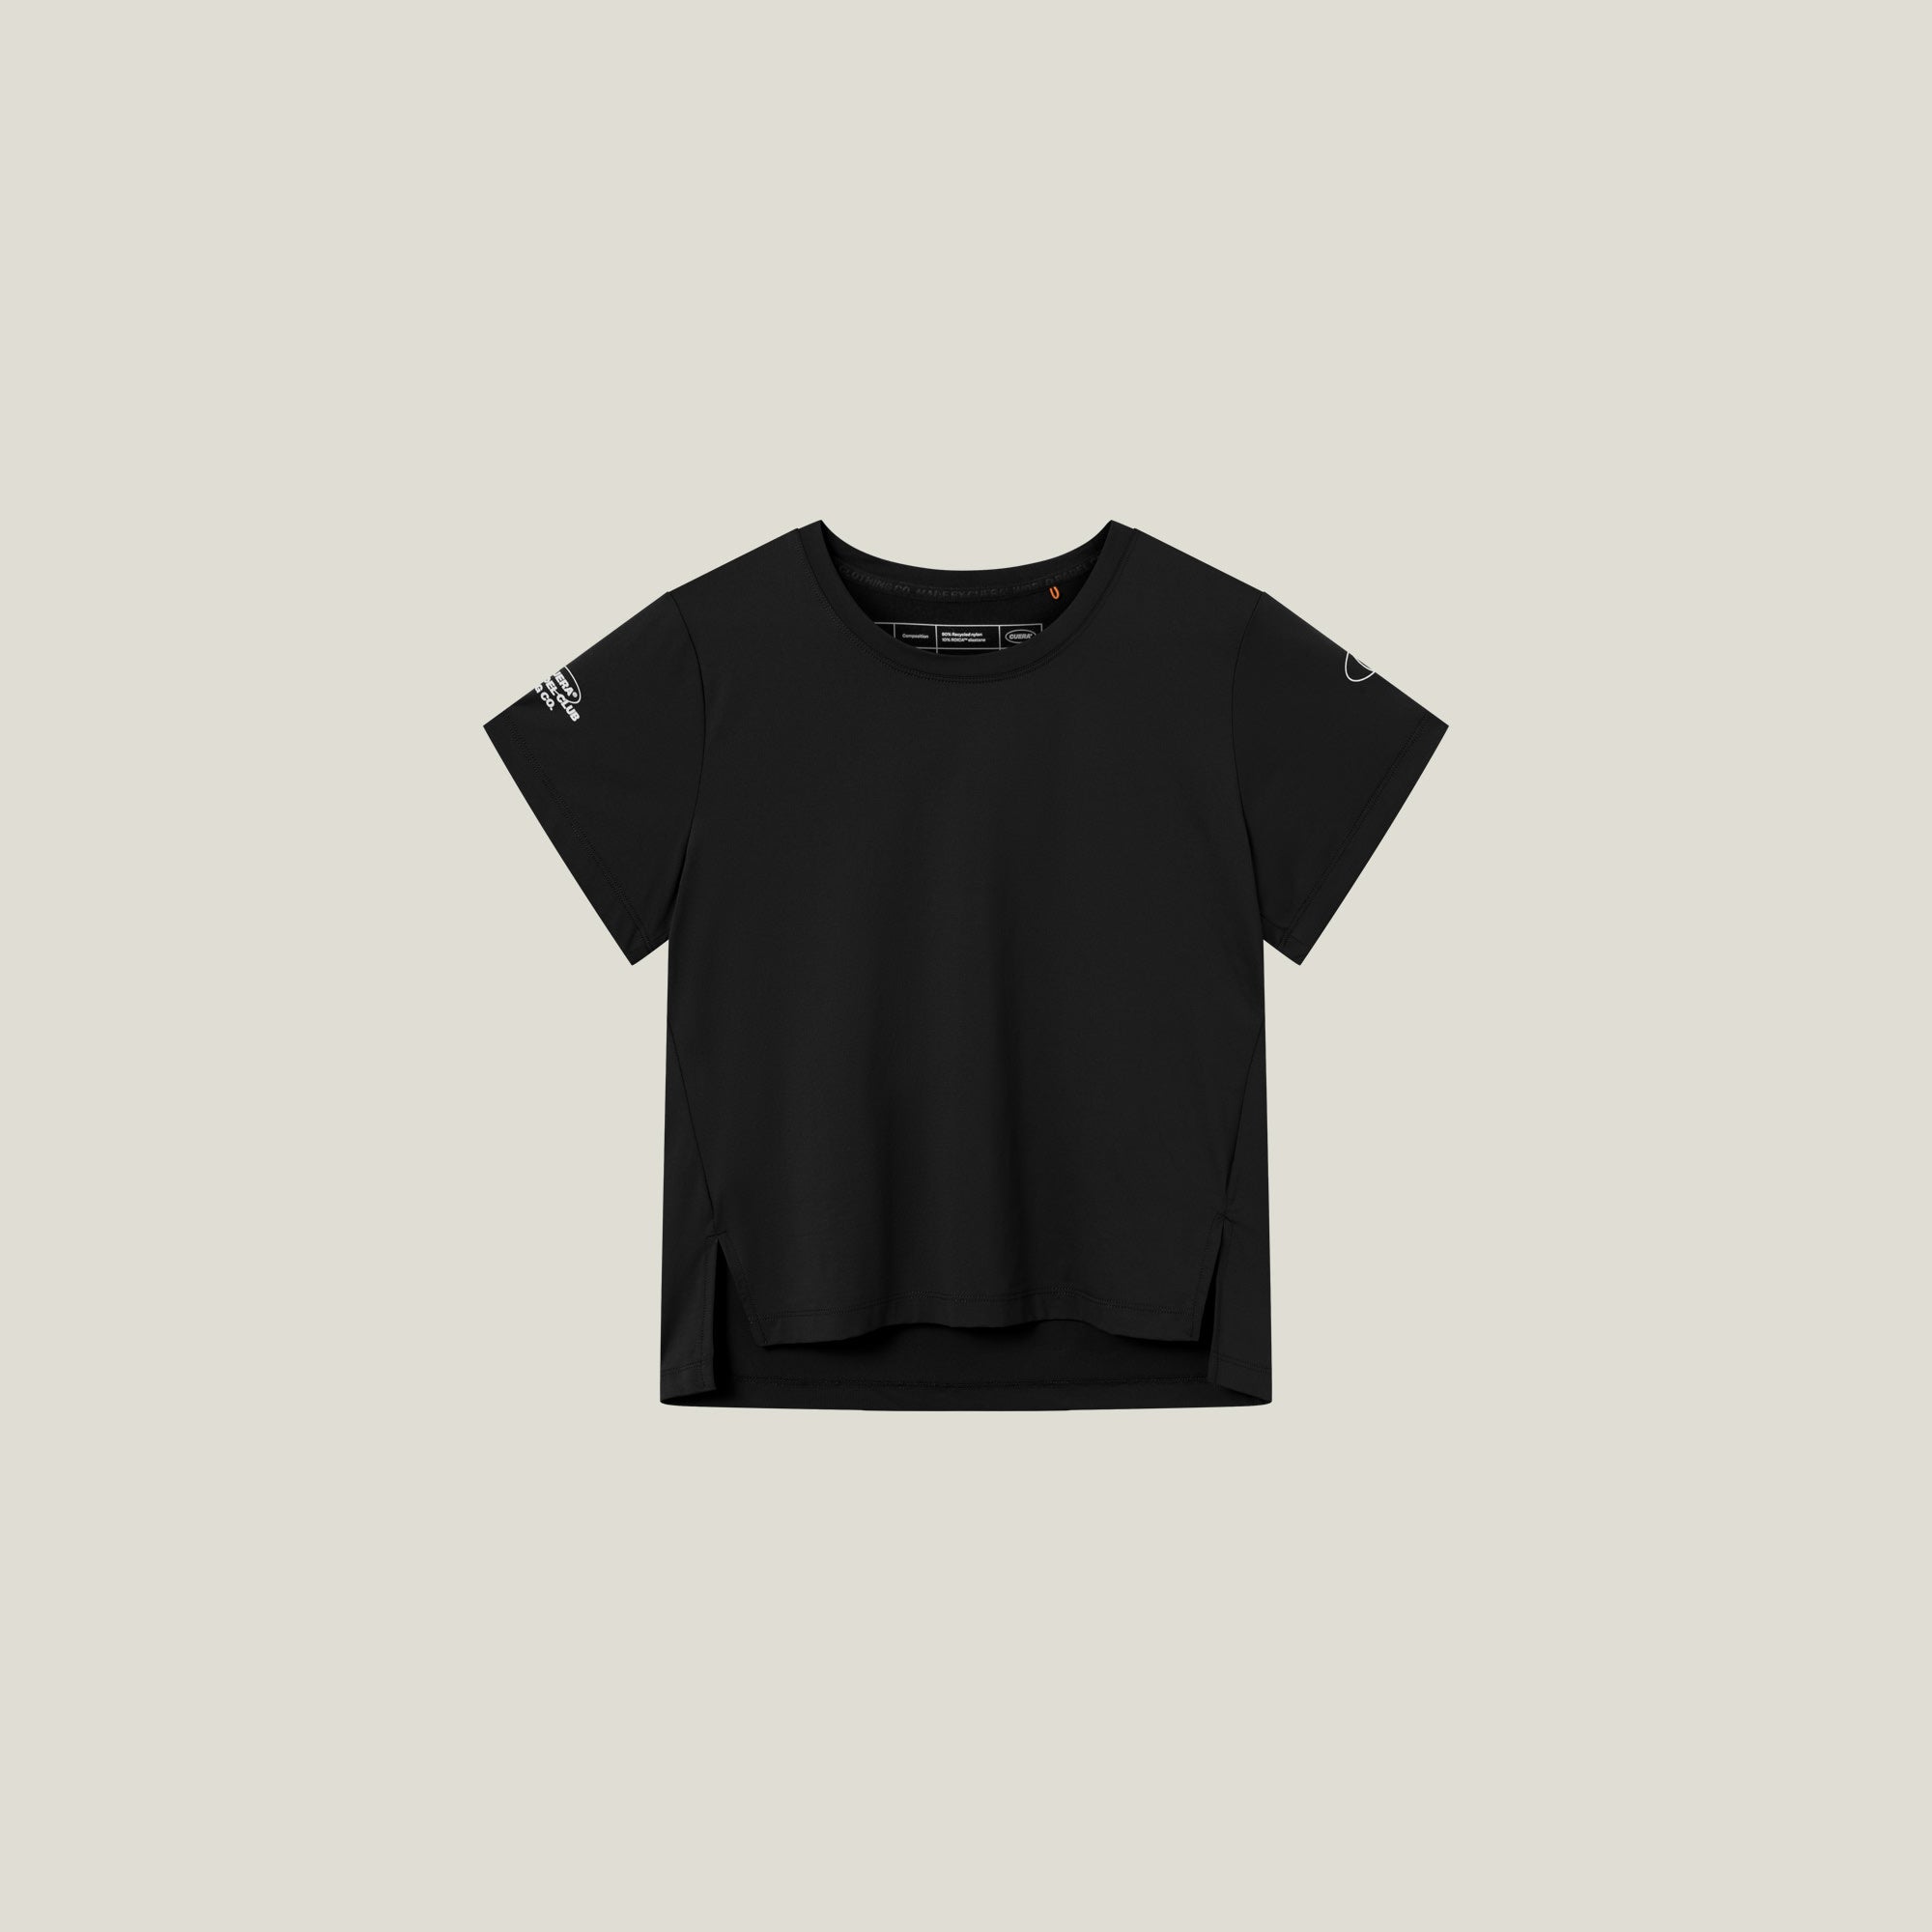 Oncourt Crop WPC T-Shirt - Sort